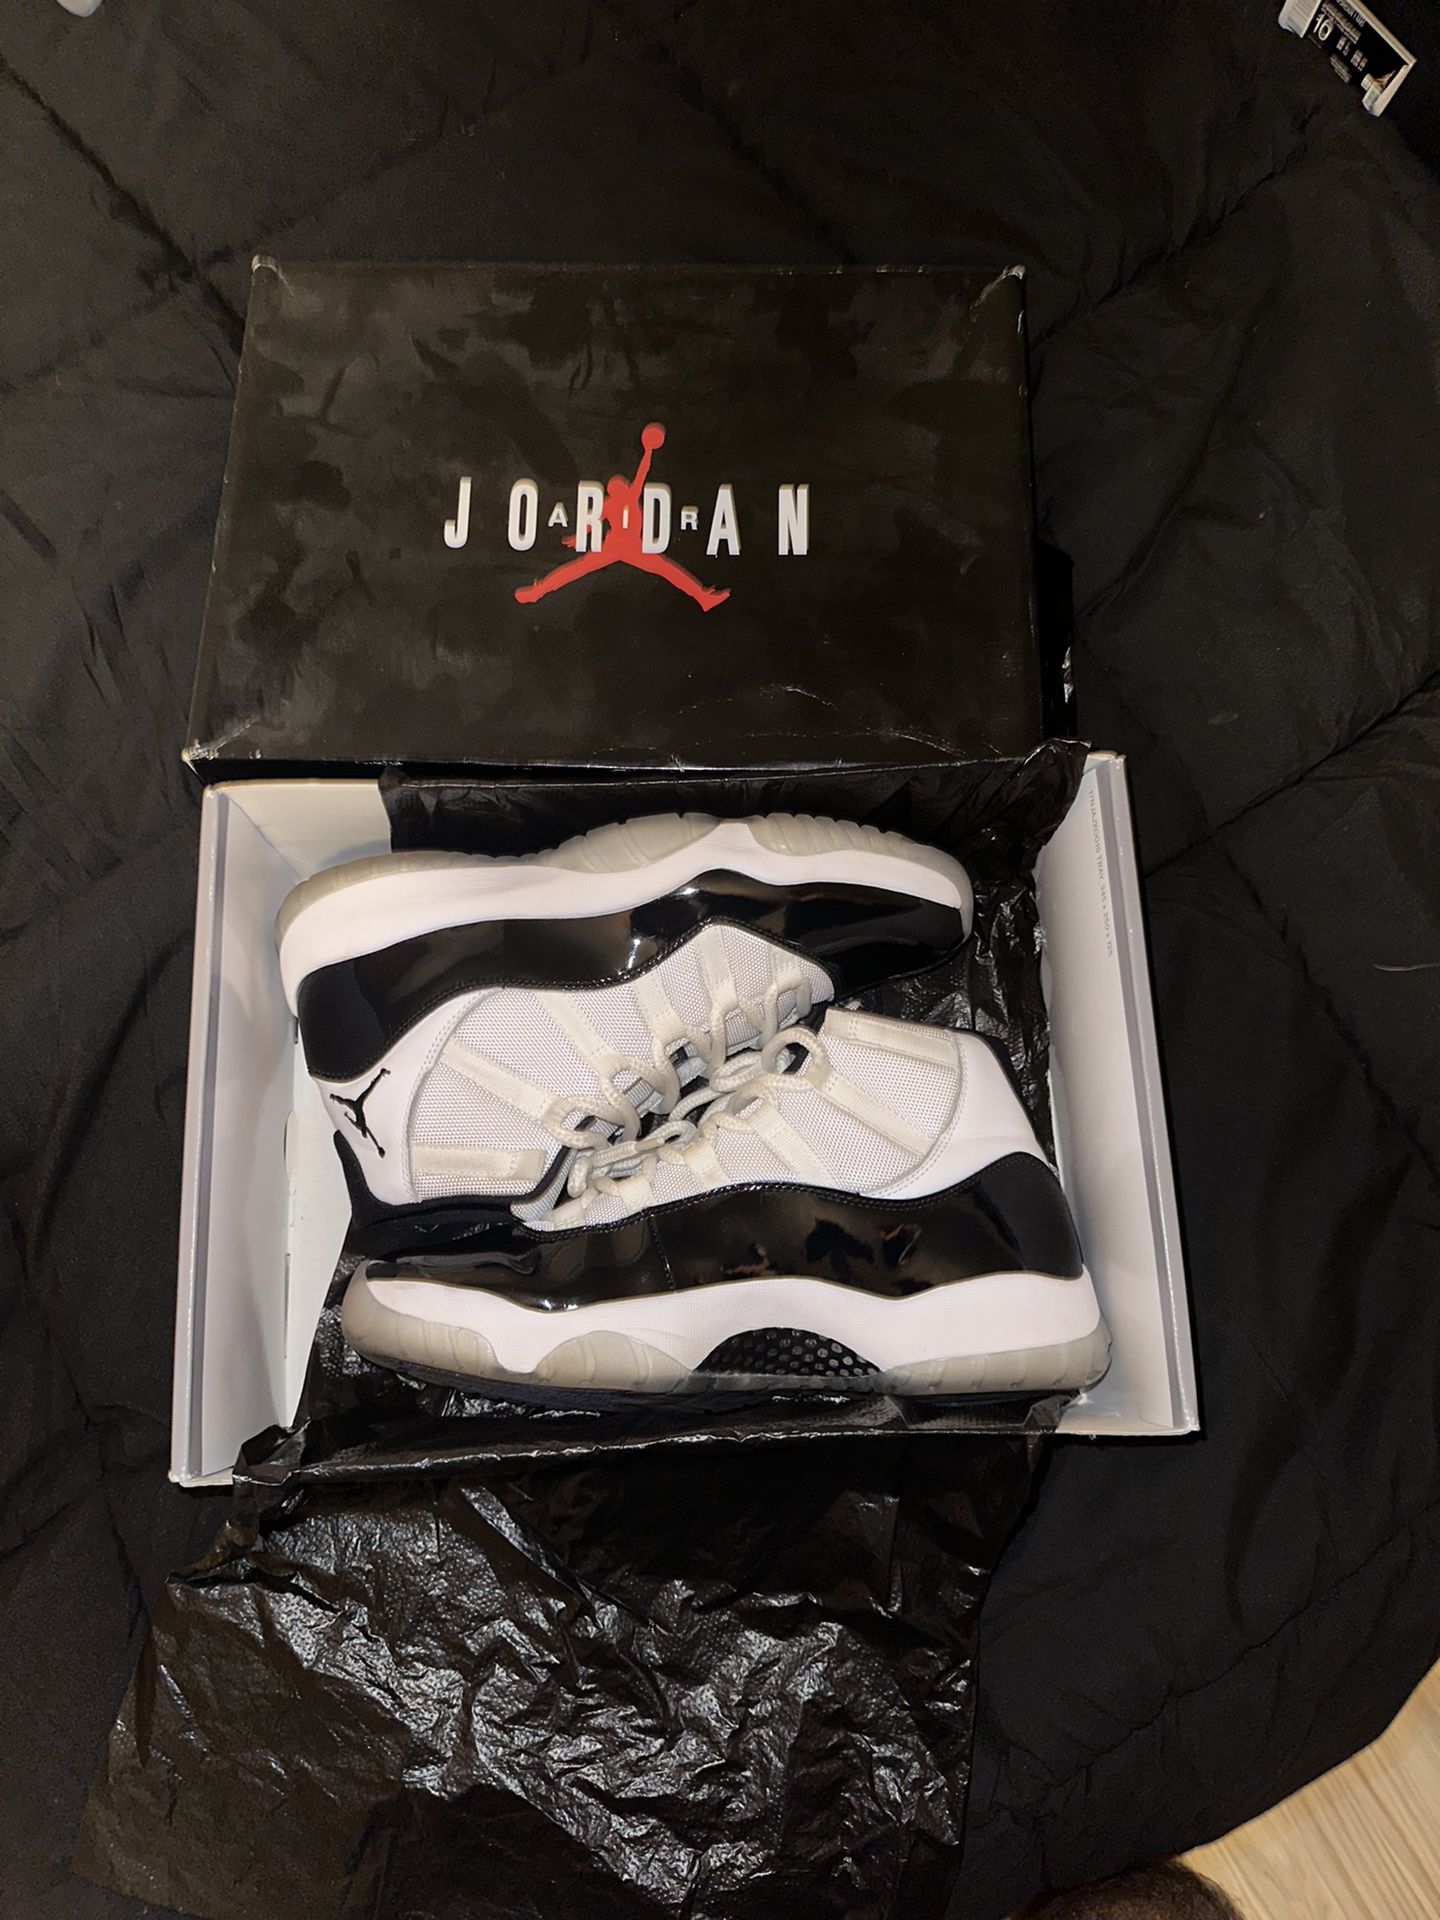 Jordan 11 Concords 2018, Size 10.